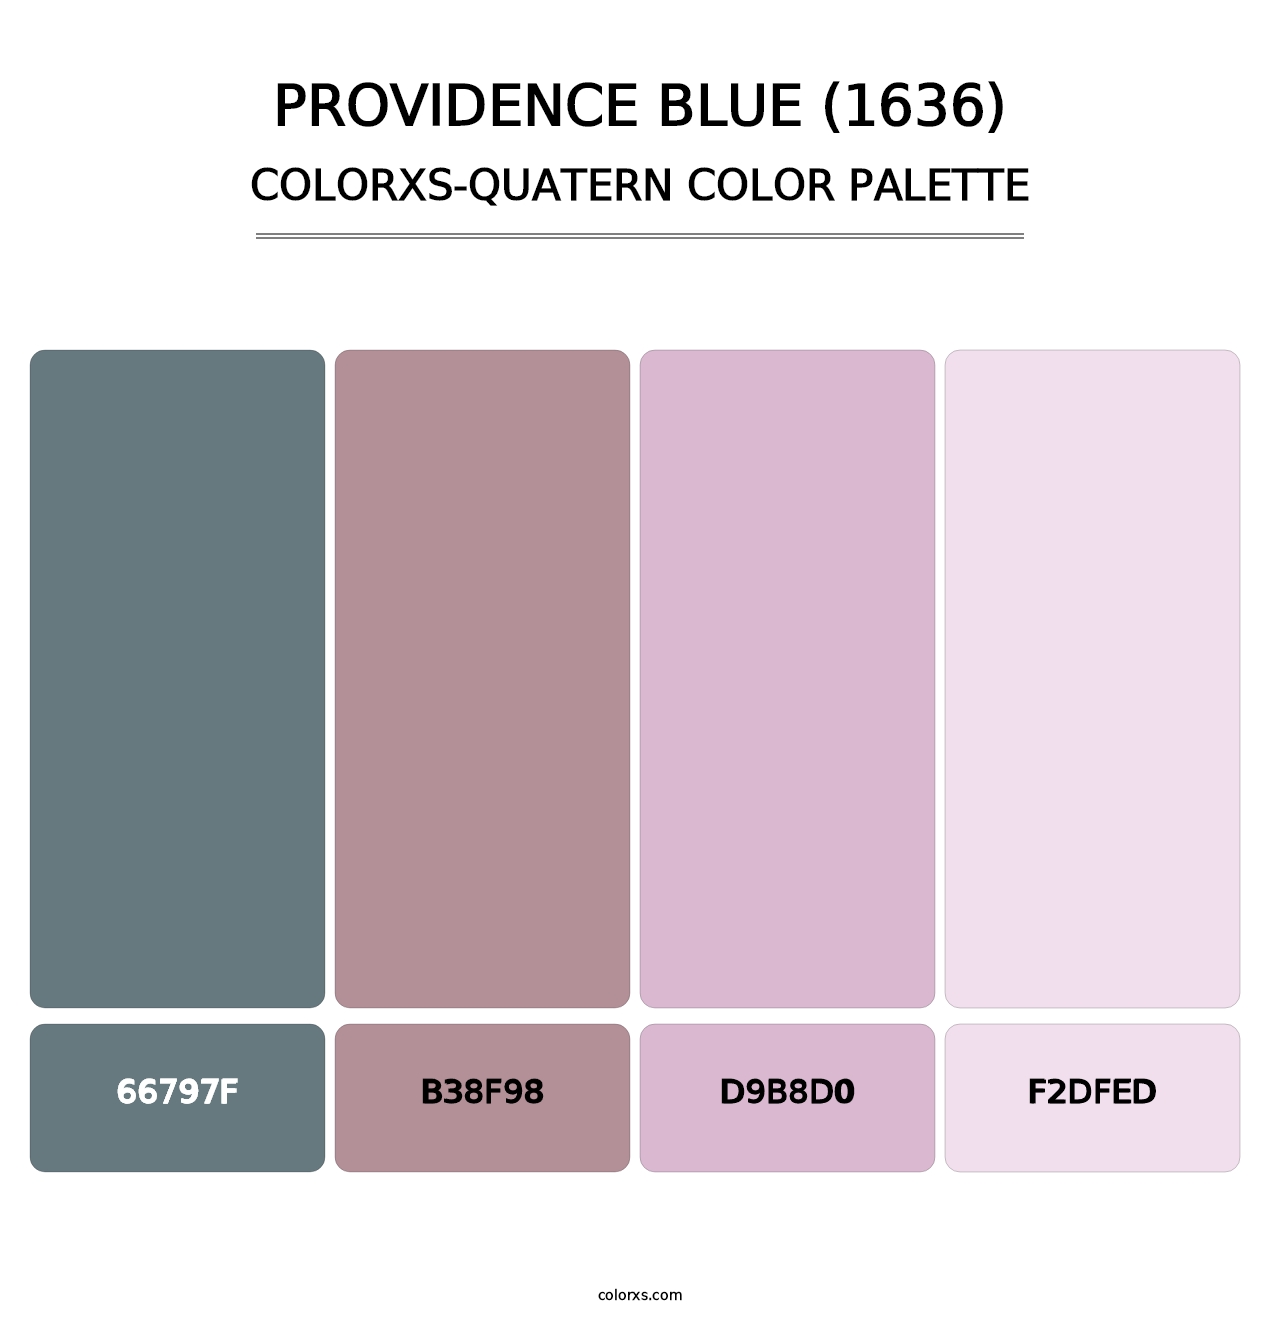 Providence Blue (1636) - Colorxs Quatern Palette